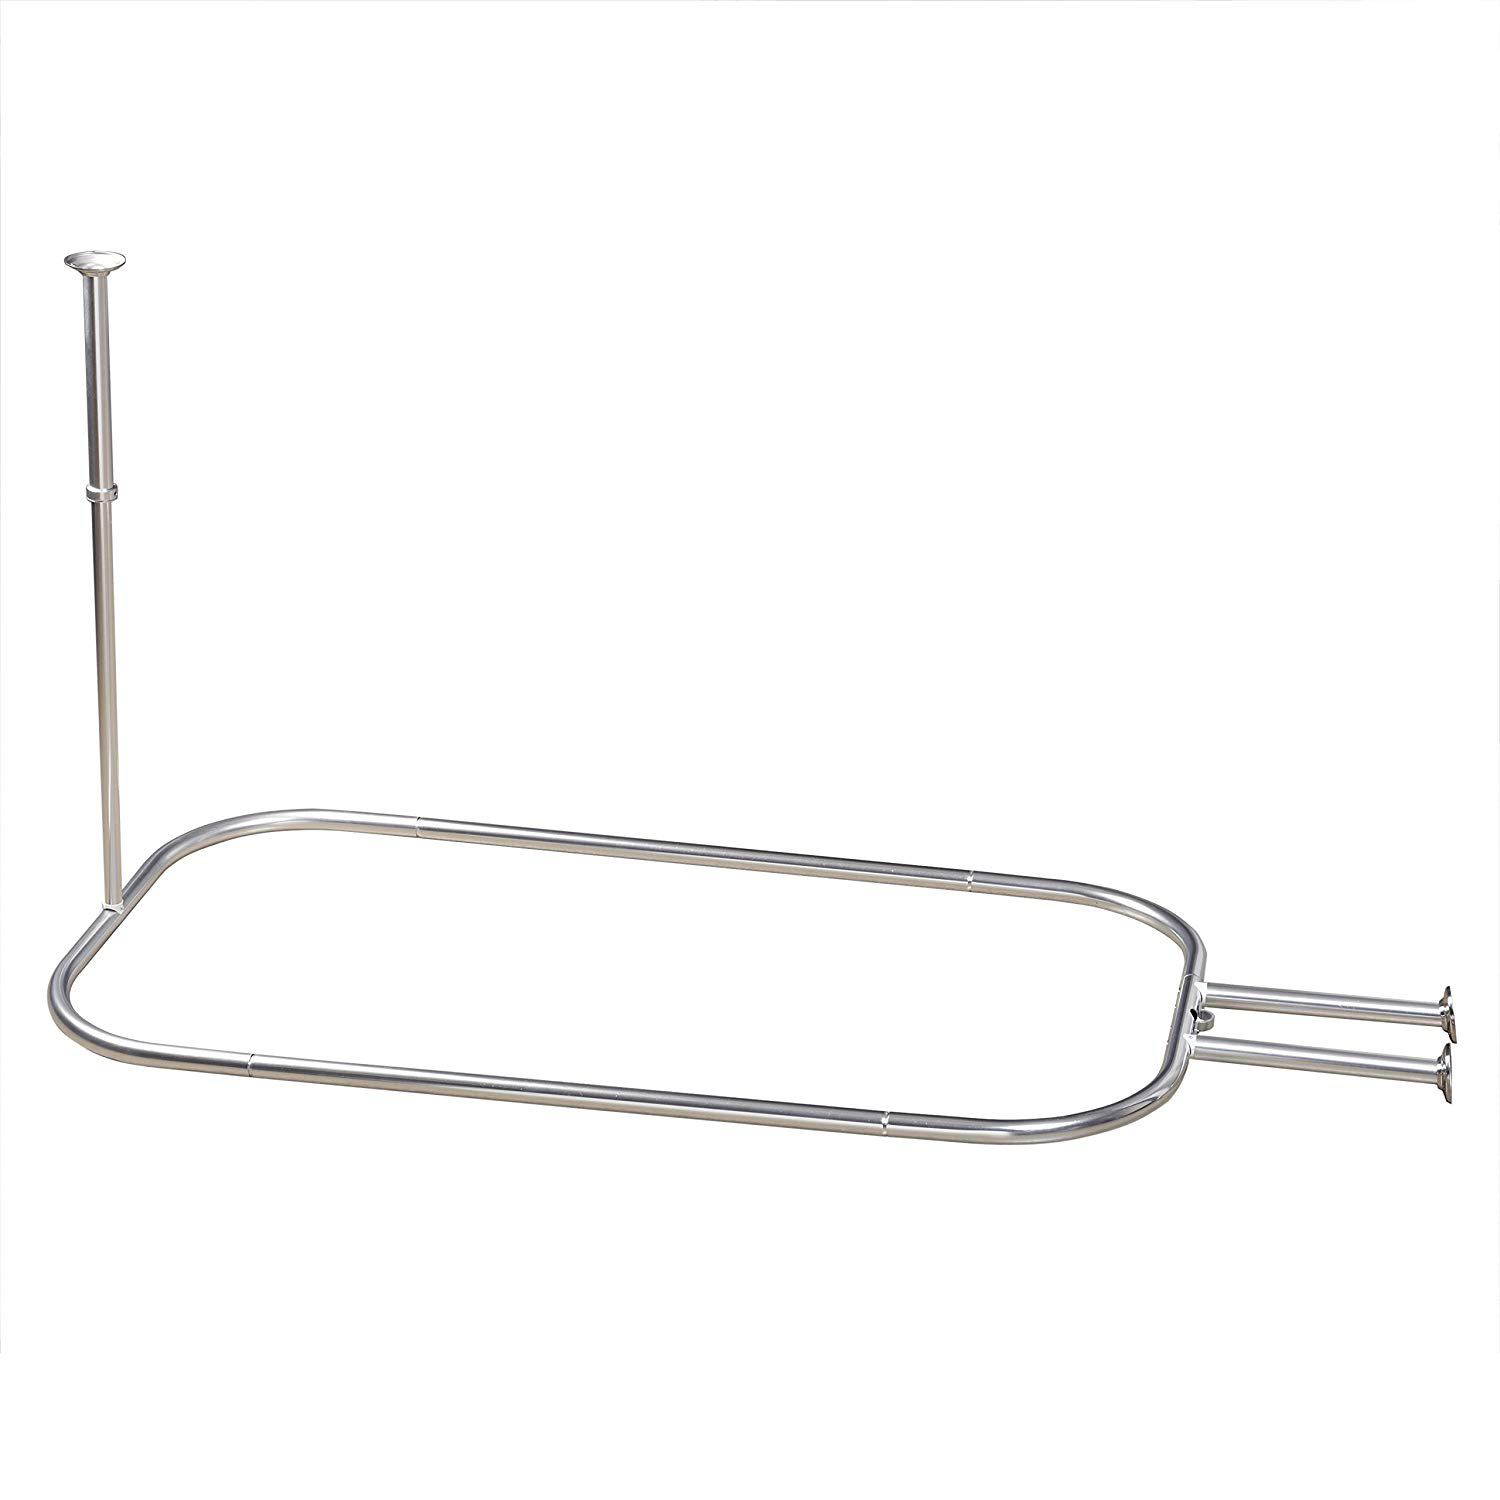 NeverRust Aluminum Hoop-Shaped Shower Rod in Chrome